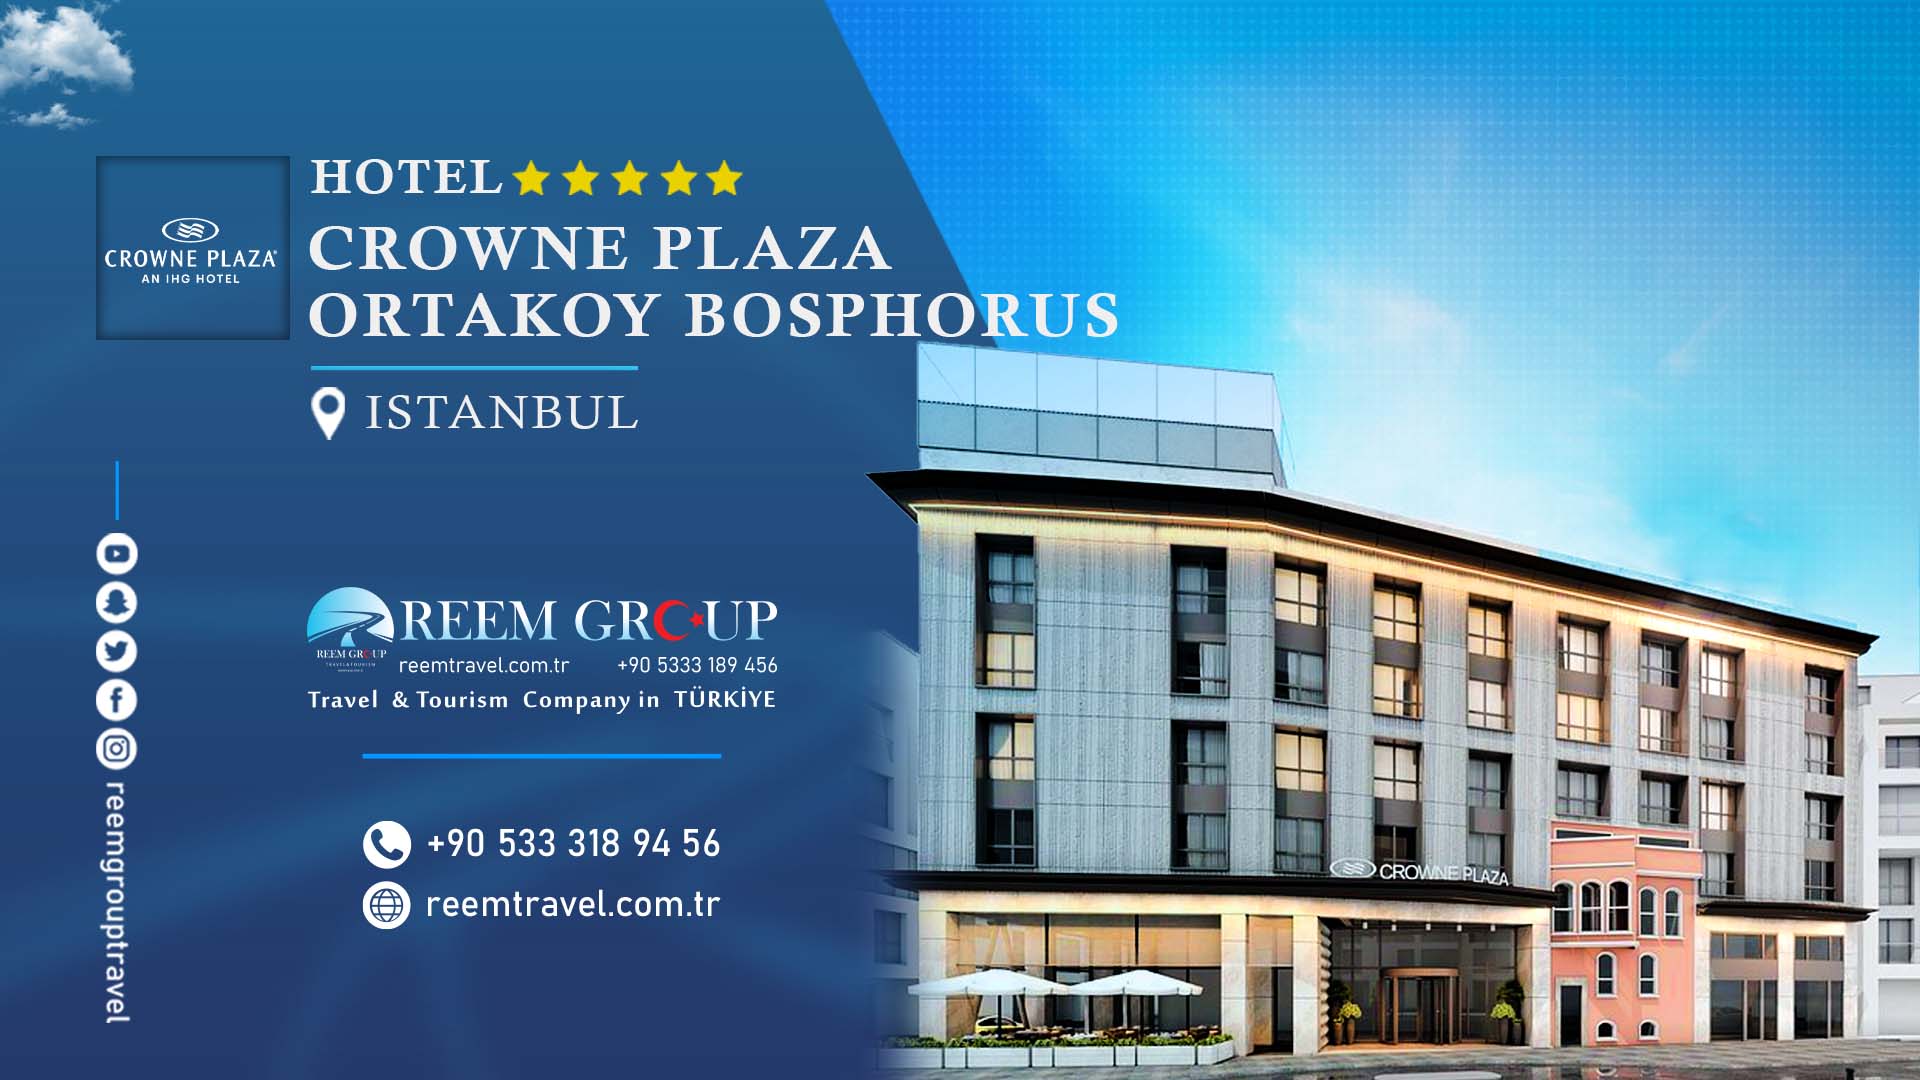 Crowne Plaza Istanbul - Ortakoy Bosphorus